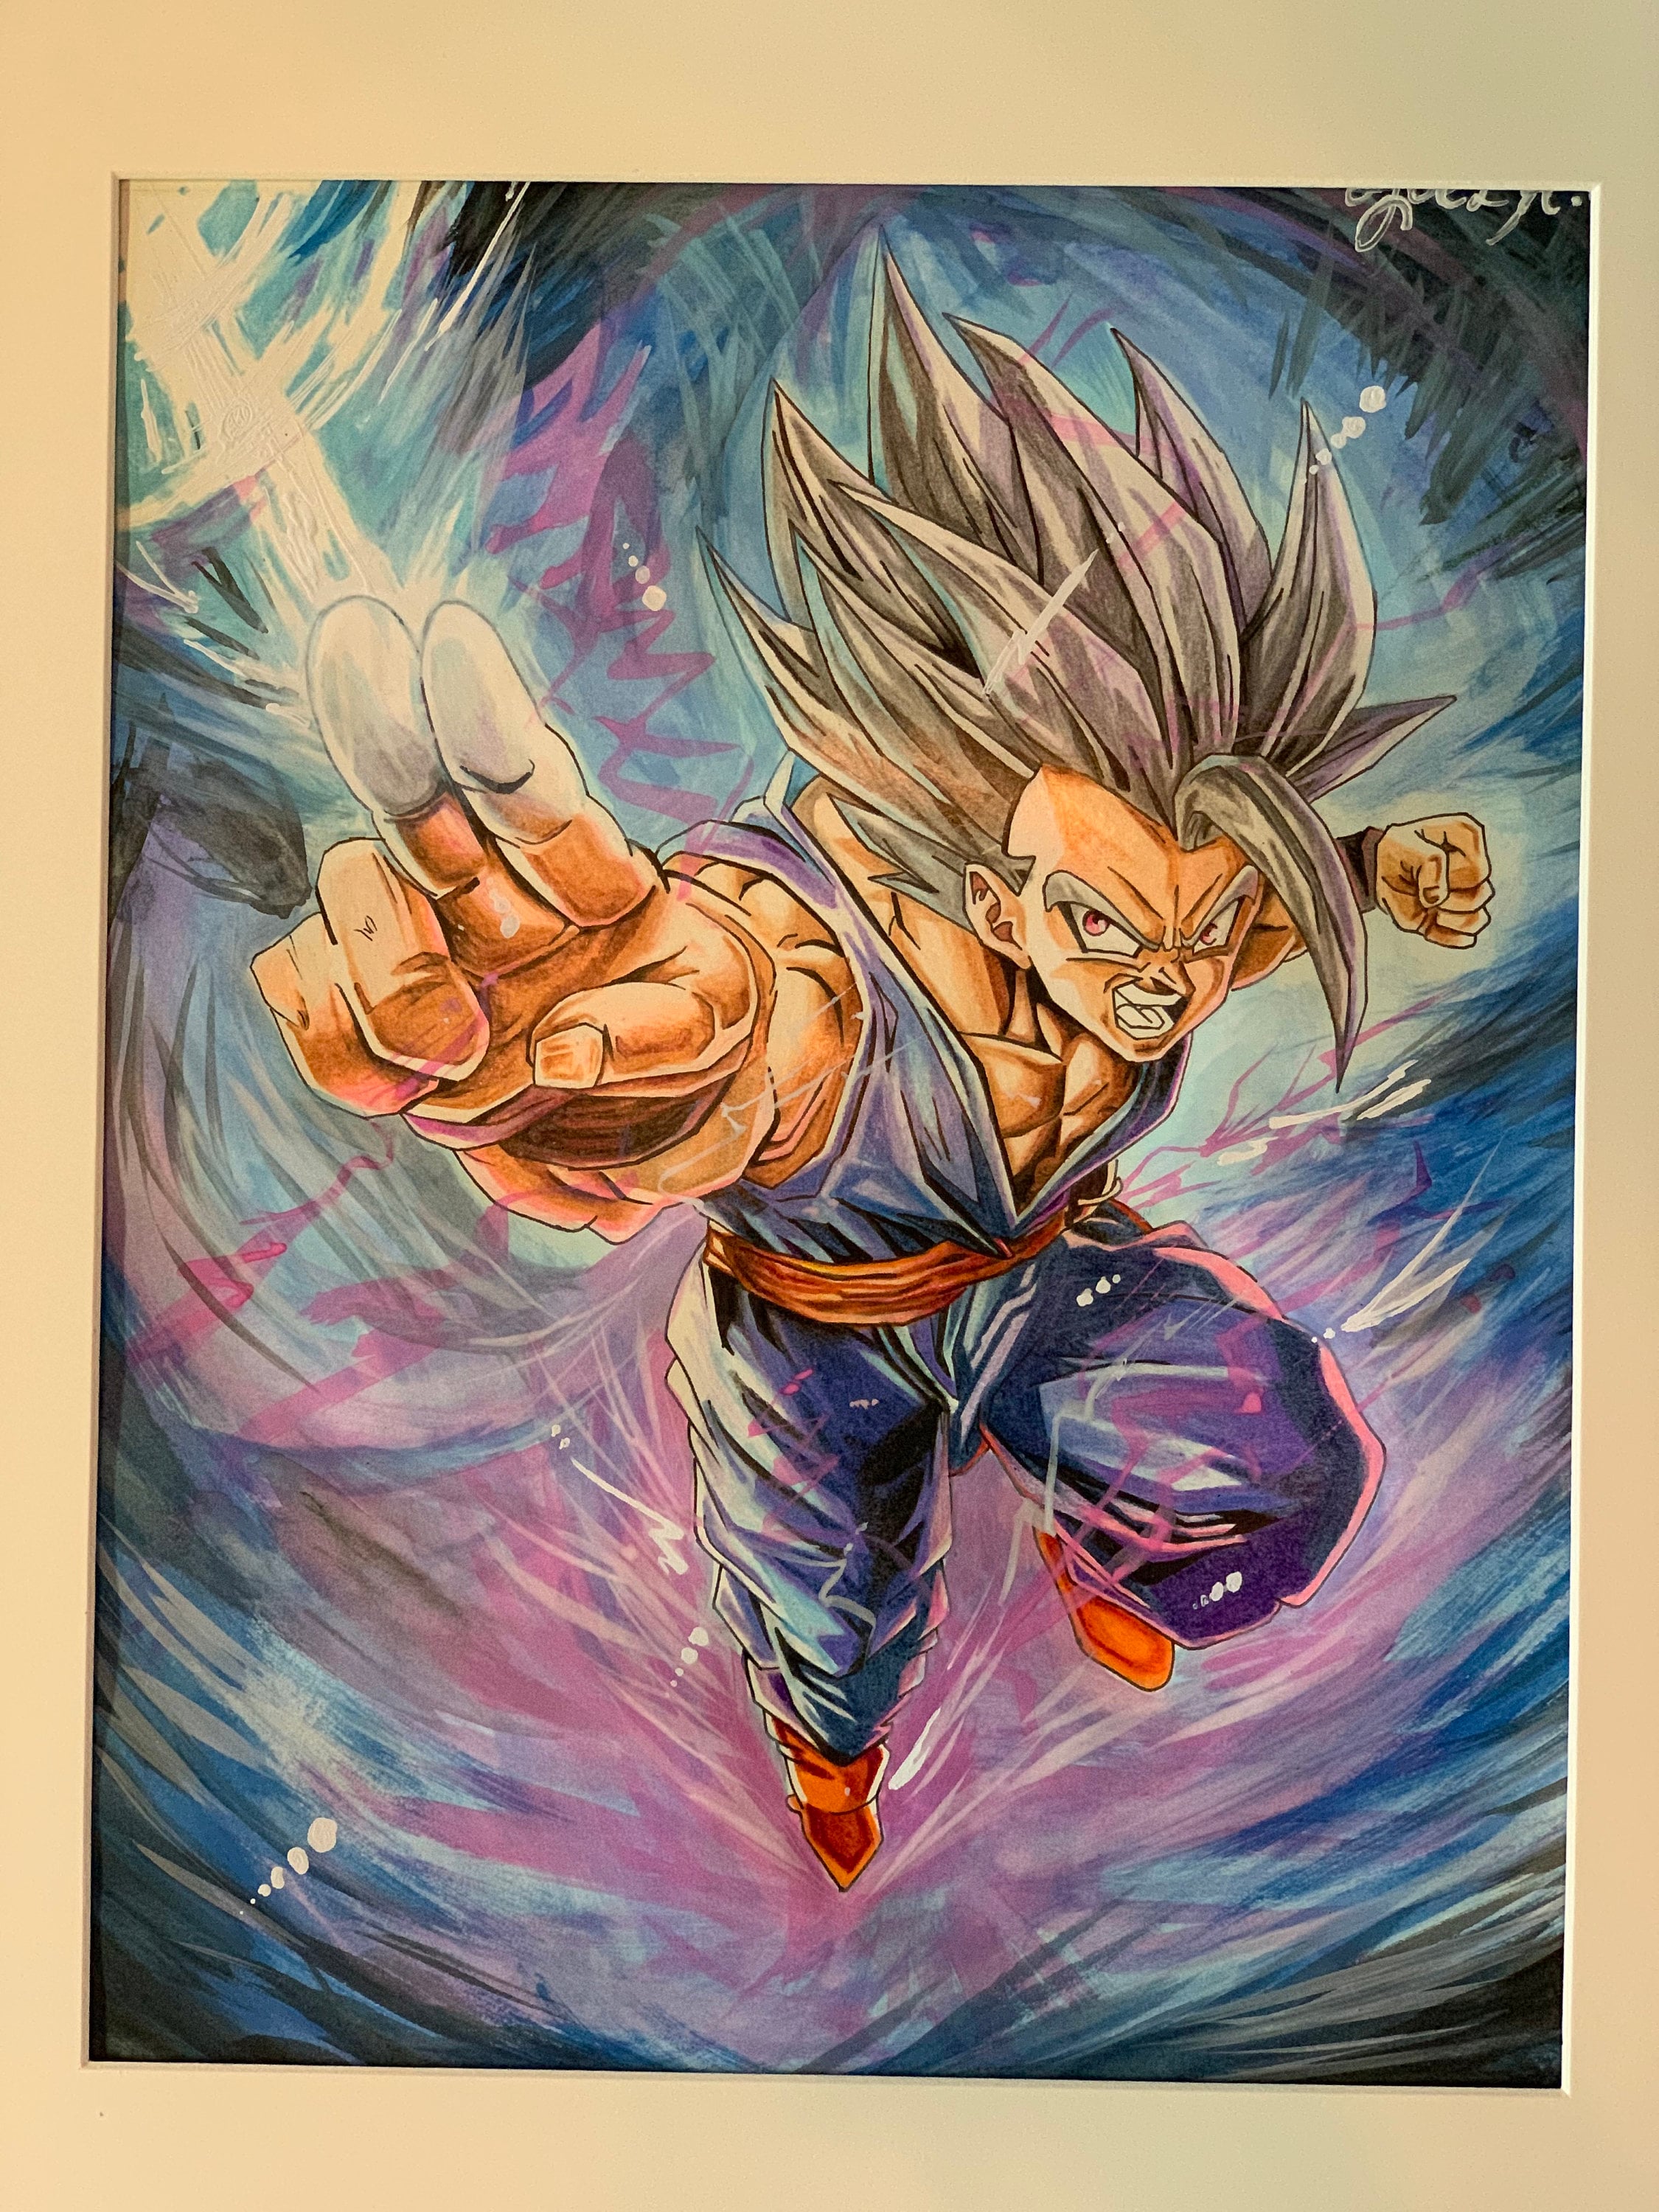 Original Goku Super Hero Portrait Anime Cartoon pencil Drawing A4 Art